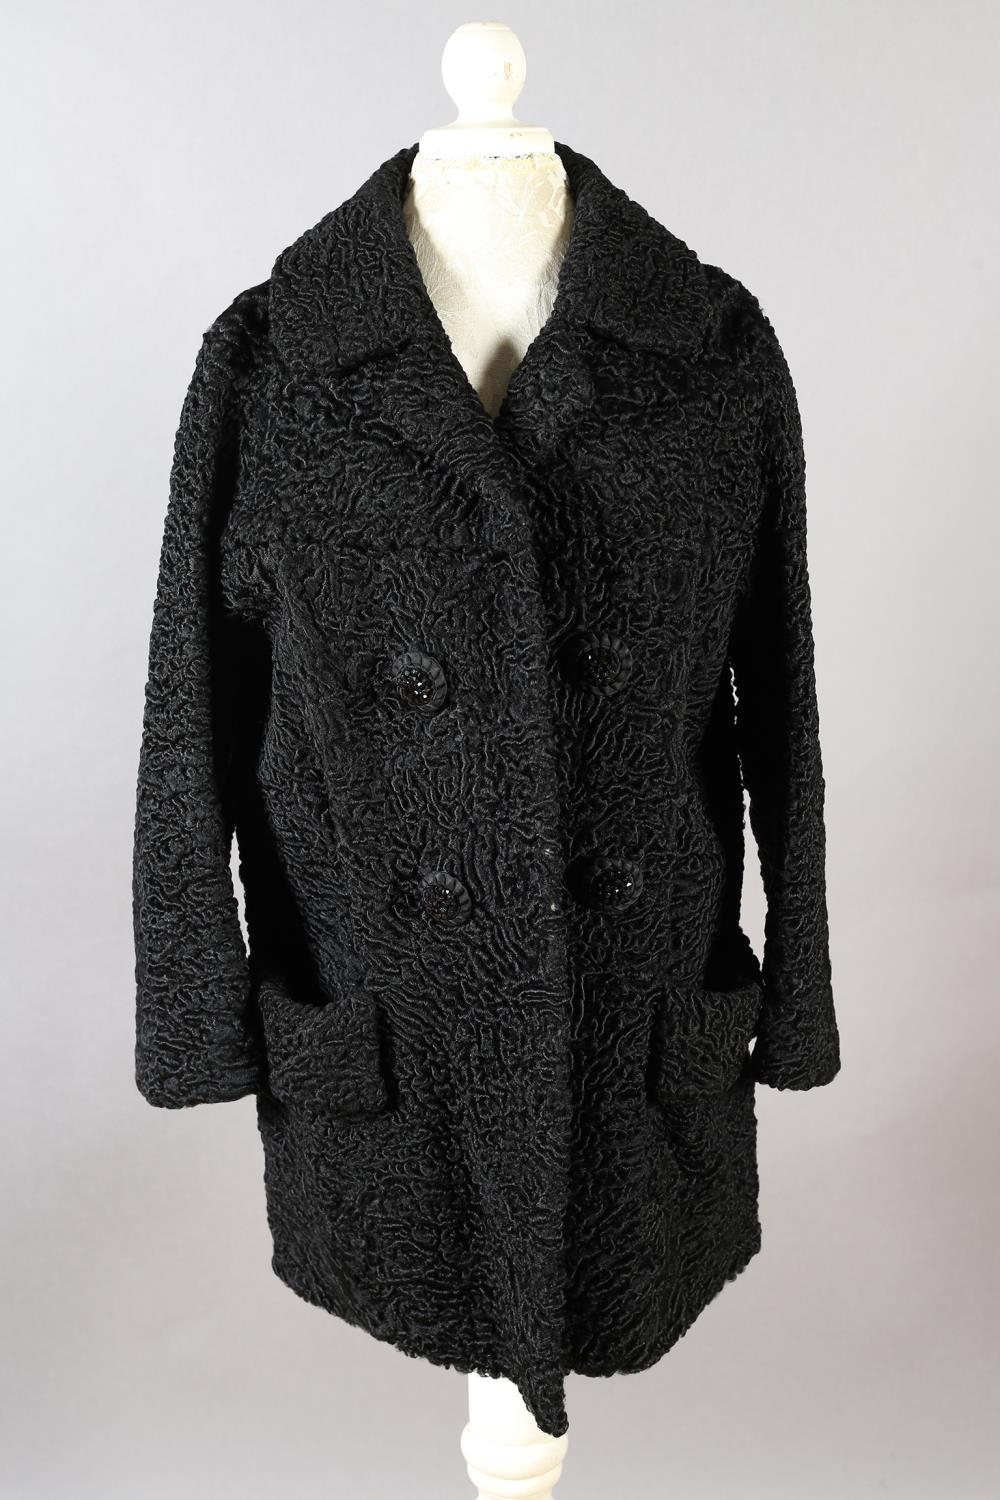 Stylish 20th century Beaver Lamb jacket/coat, c 1950’s, black, three-quarter length, black lining